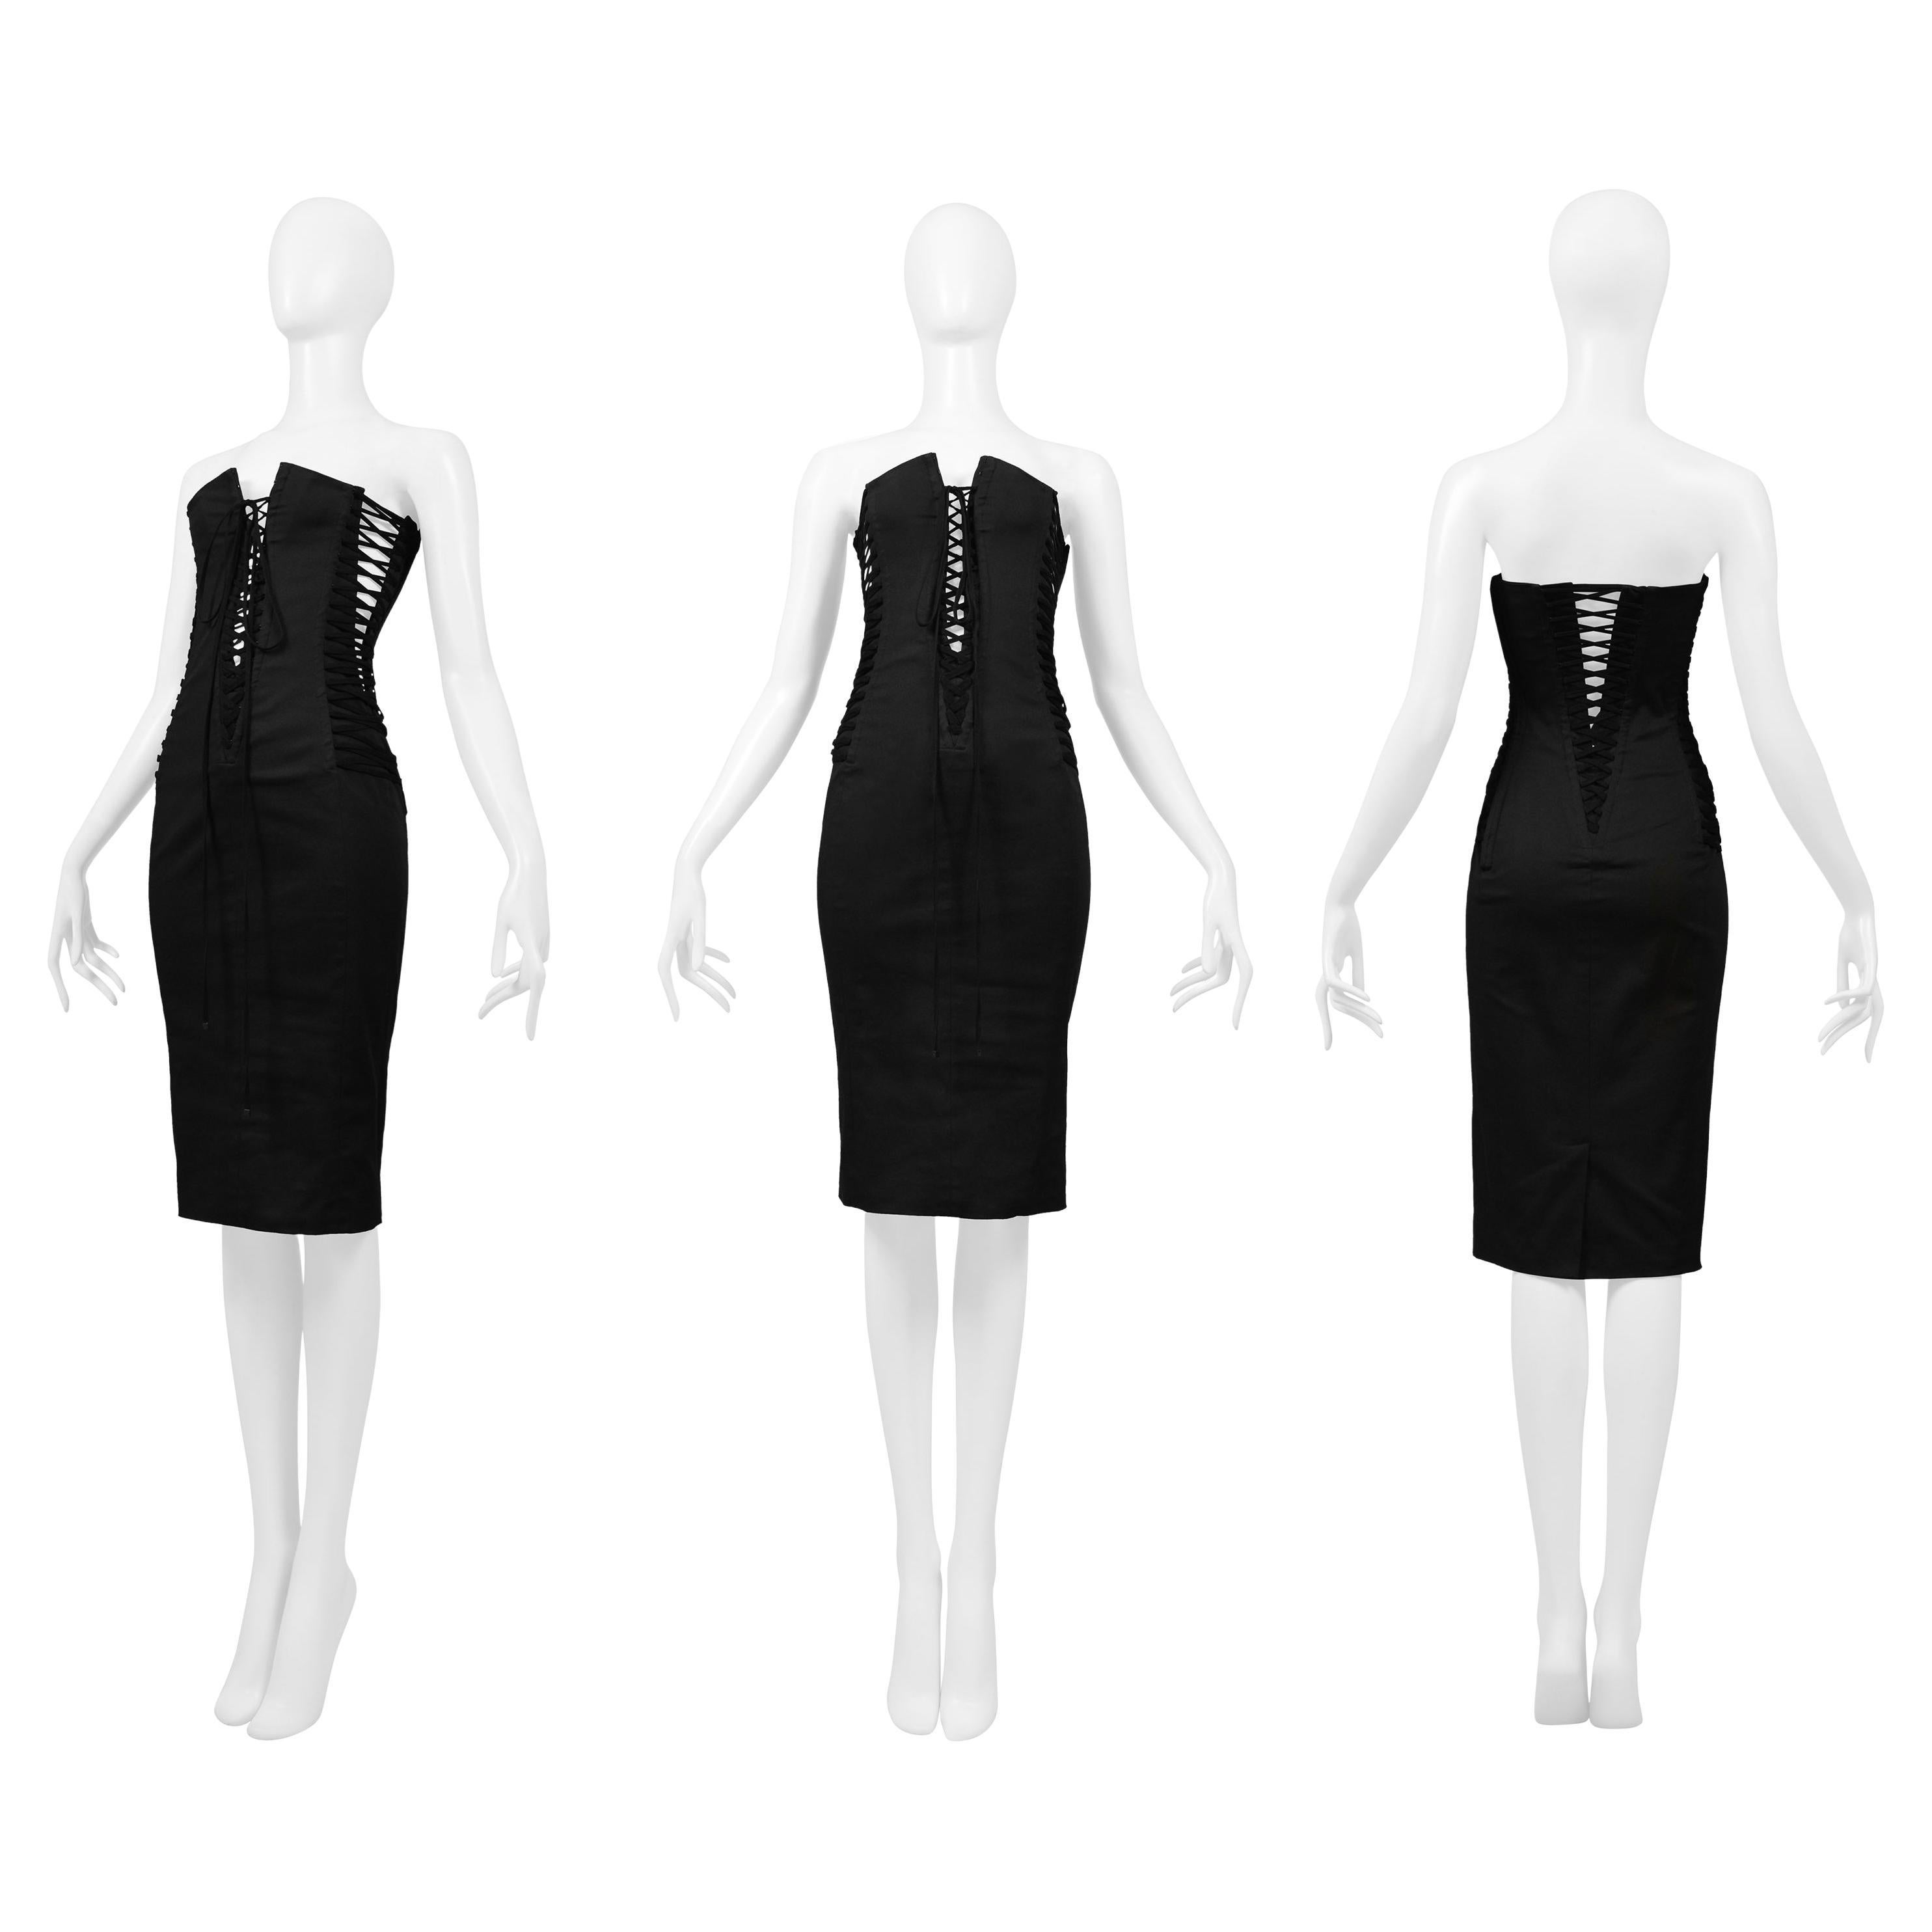 Dolce & Gabbana Black Strapless Corset Dress 2002 For Sale 3